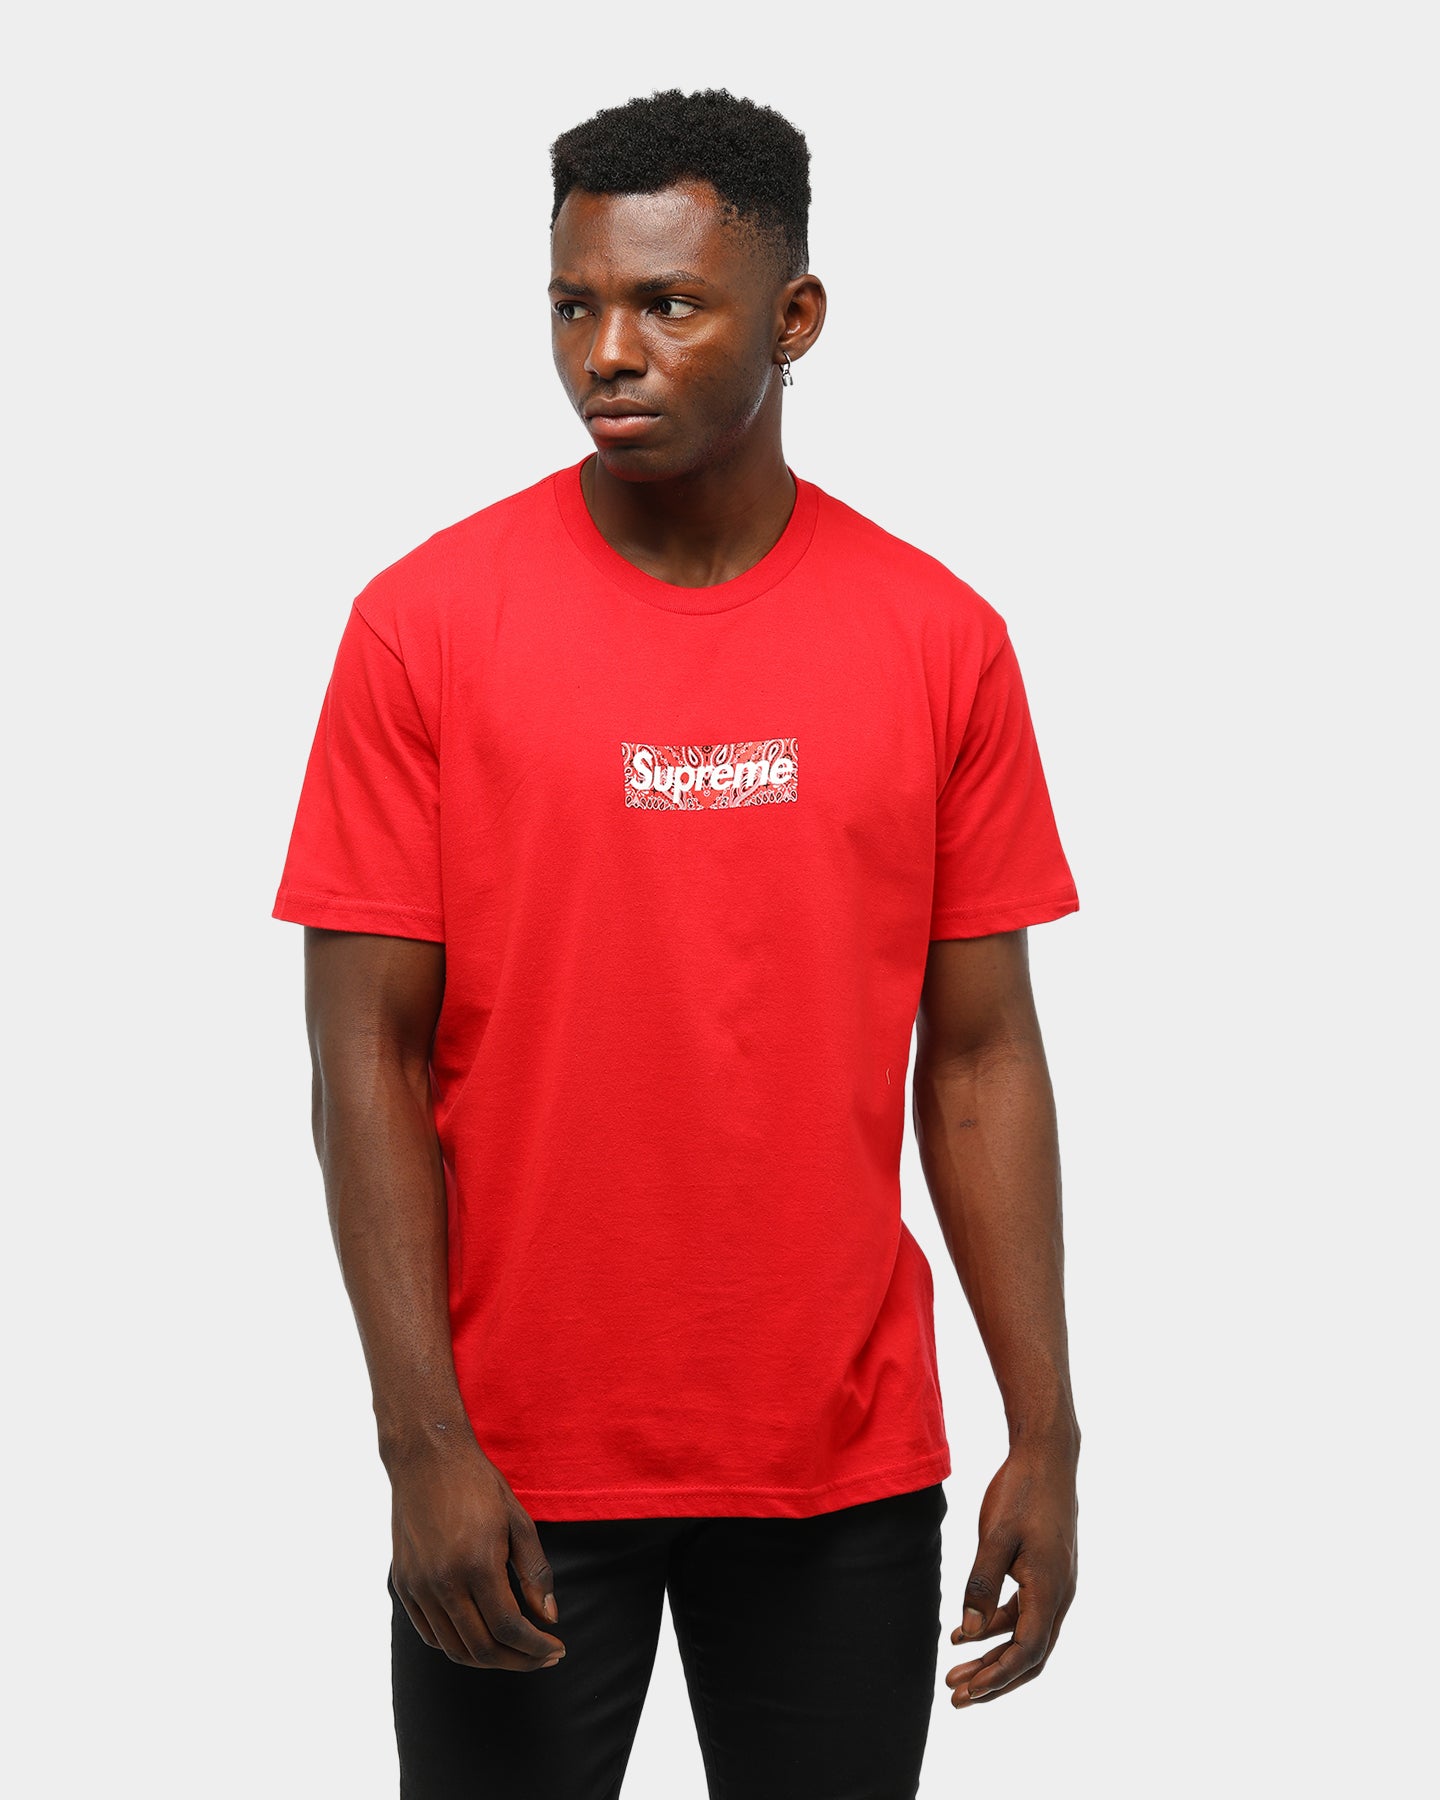 red box logo shirt